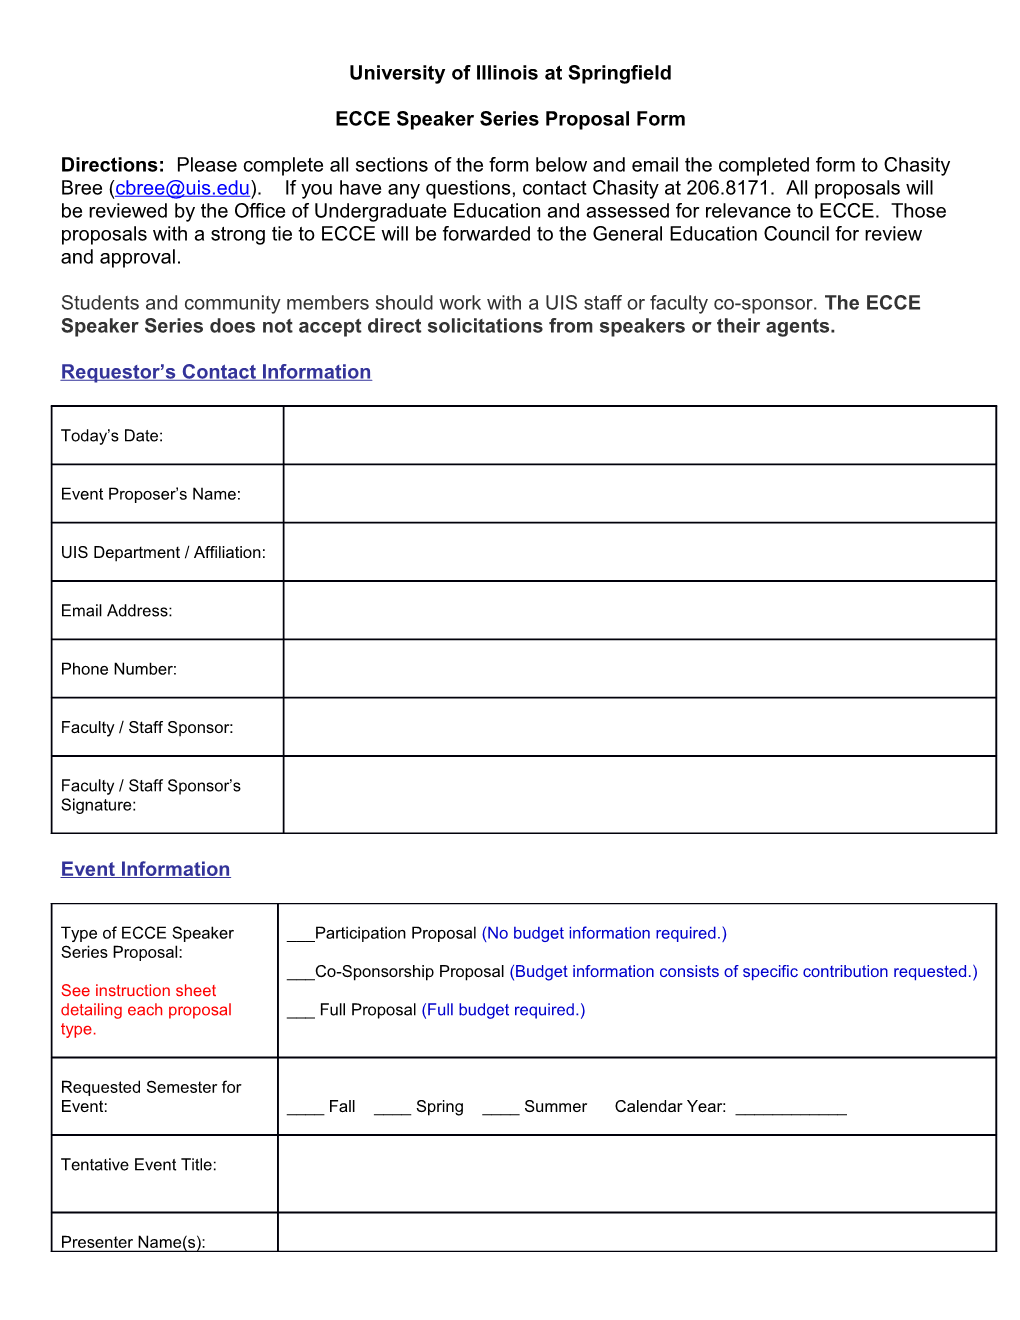 ECCE Speaker Series Proposal Form